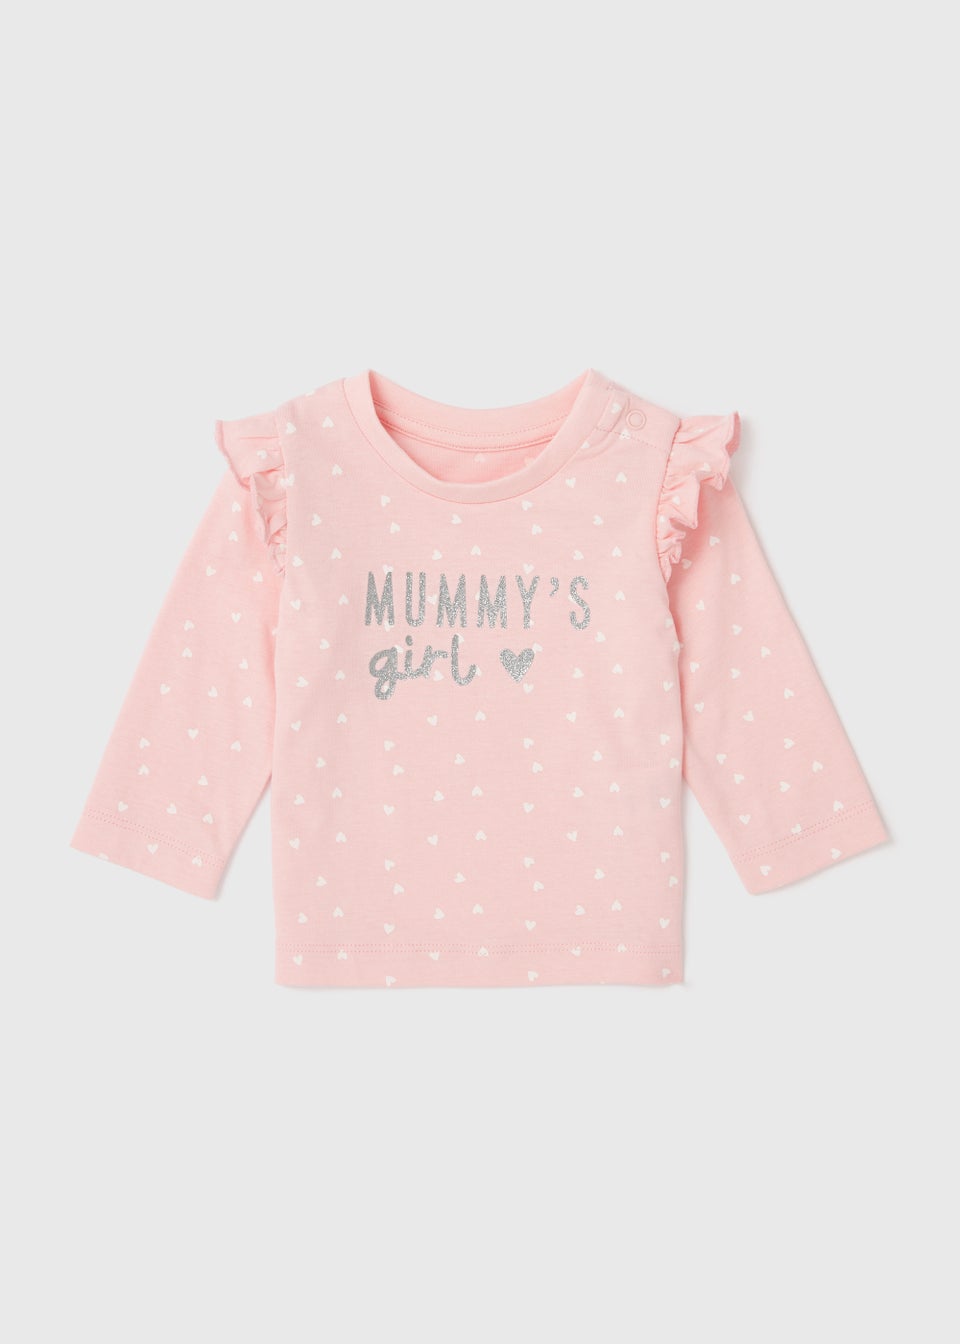 Baby Clothes Online  Shop All Babywear - Matalan